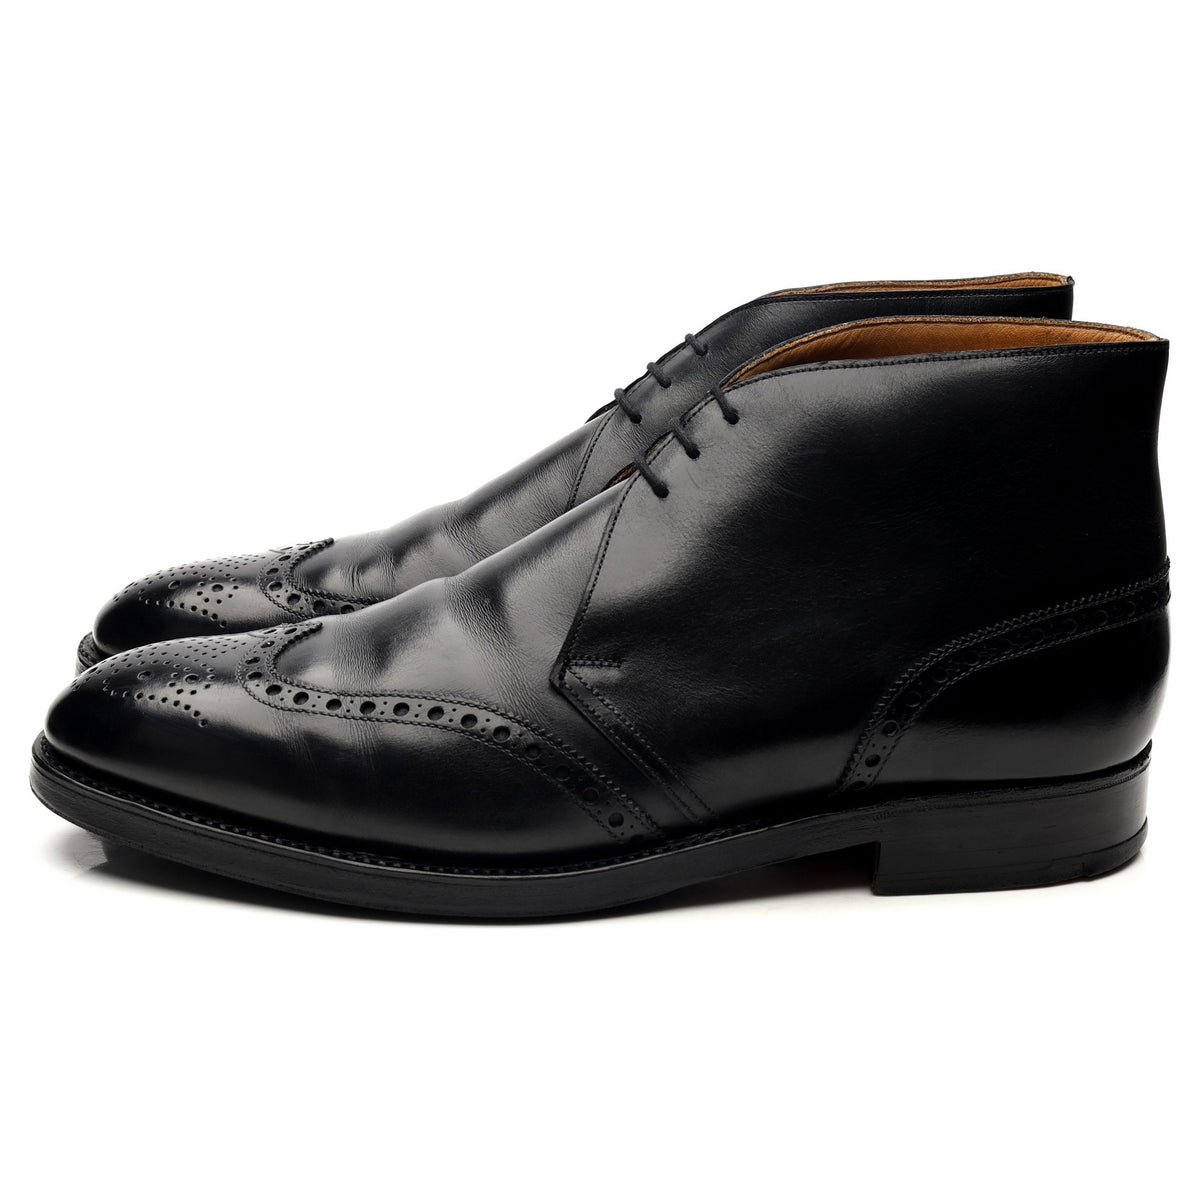 Black Leather Chukka Boots UK 10 E